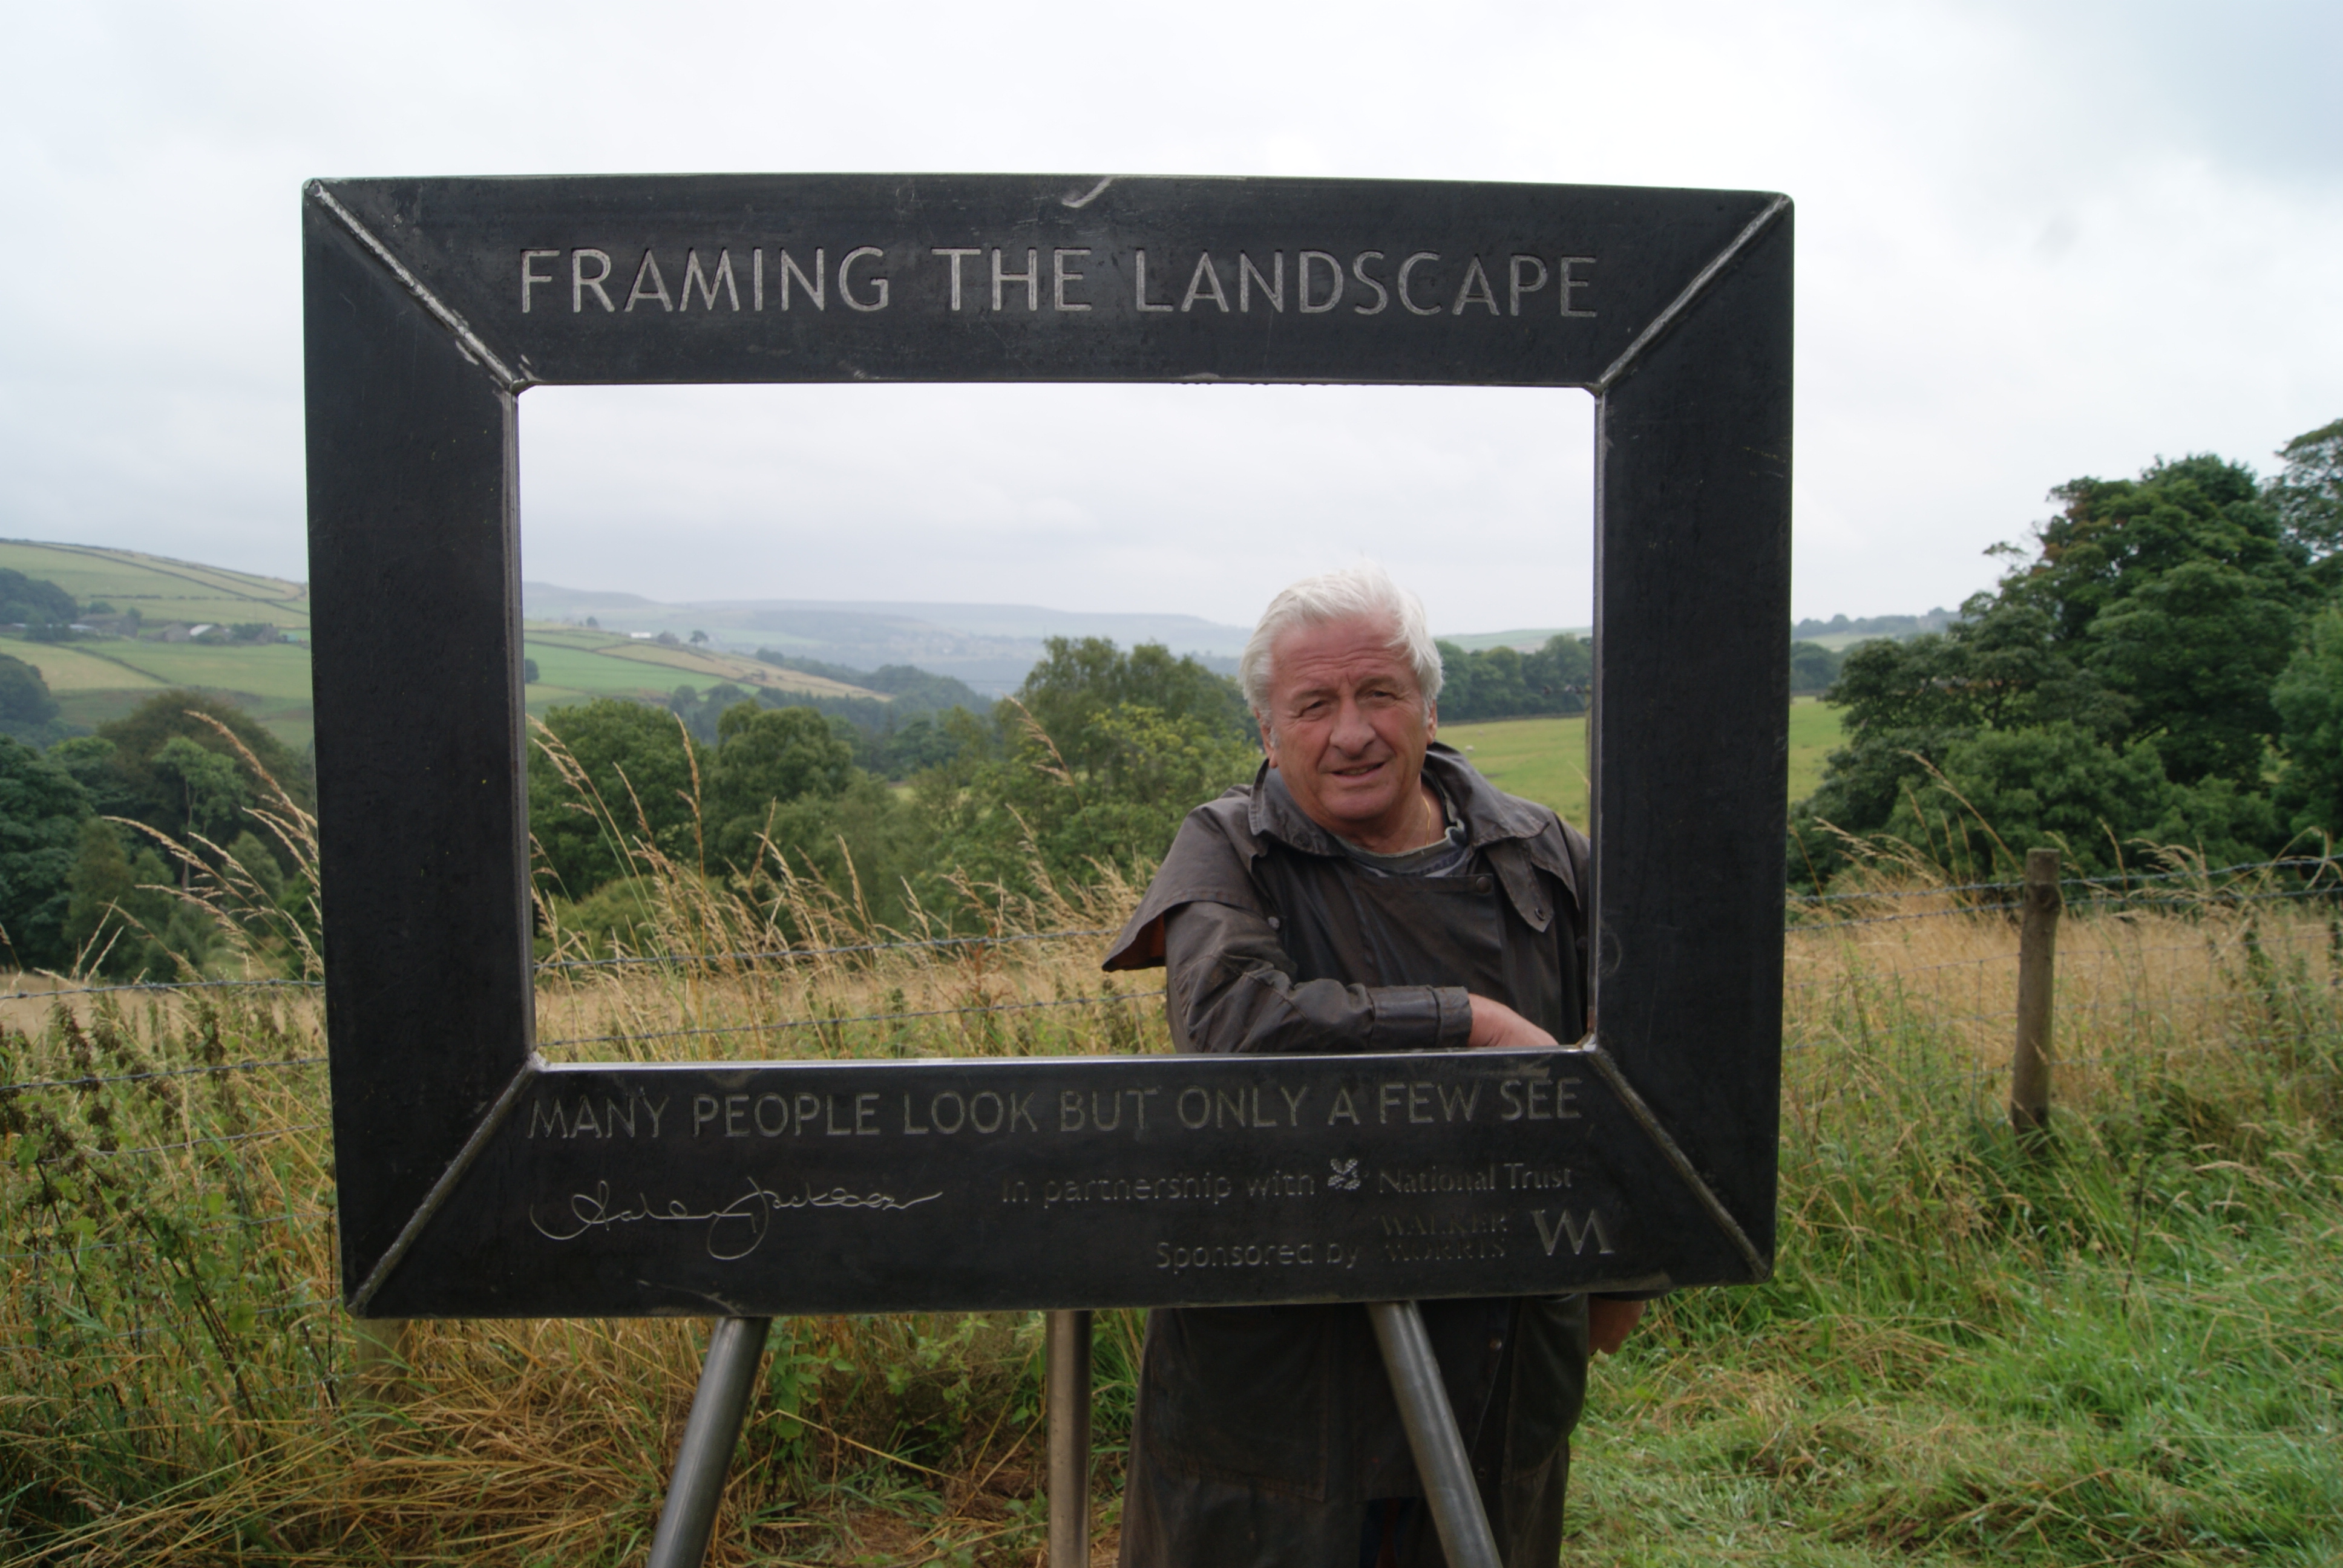 Ashley Jackson launches his framing the landscape sculpture